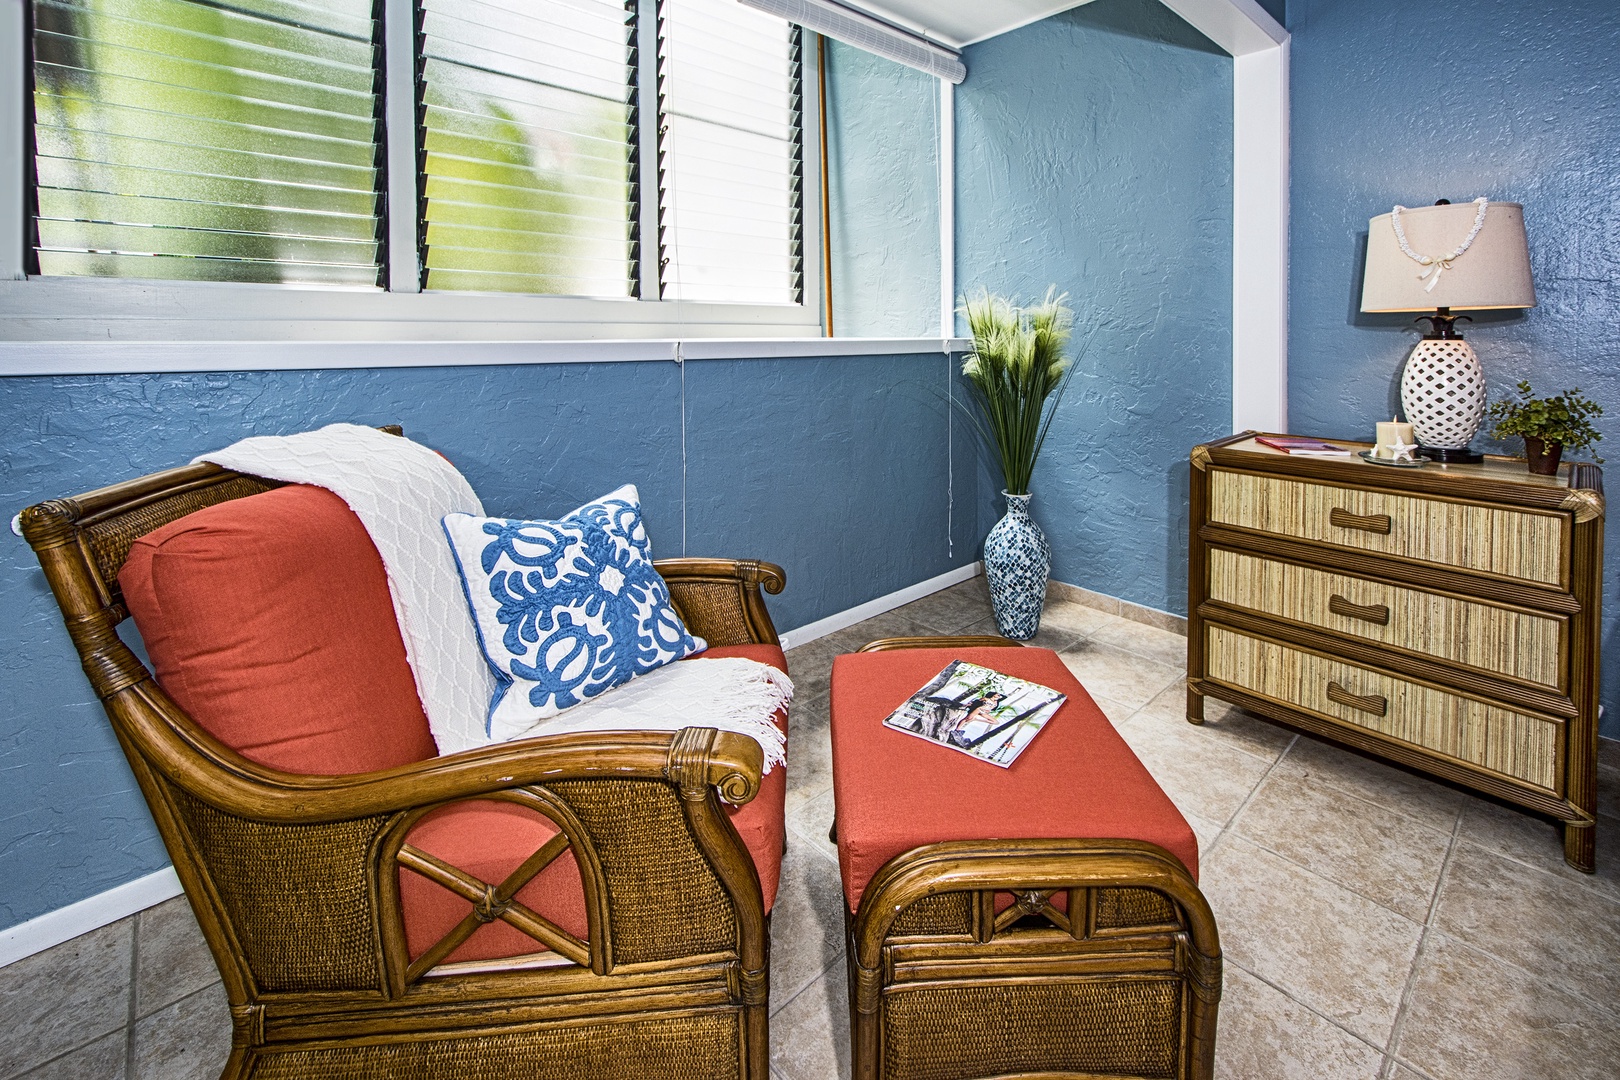 Kailua Kona Vacation Rentals, Keauhou Resort 104 - Seating area in the bedroom